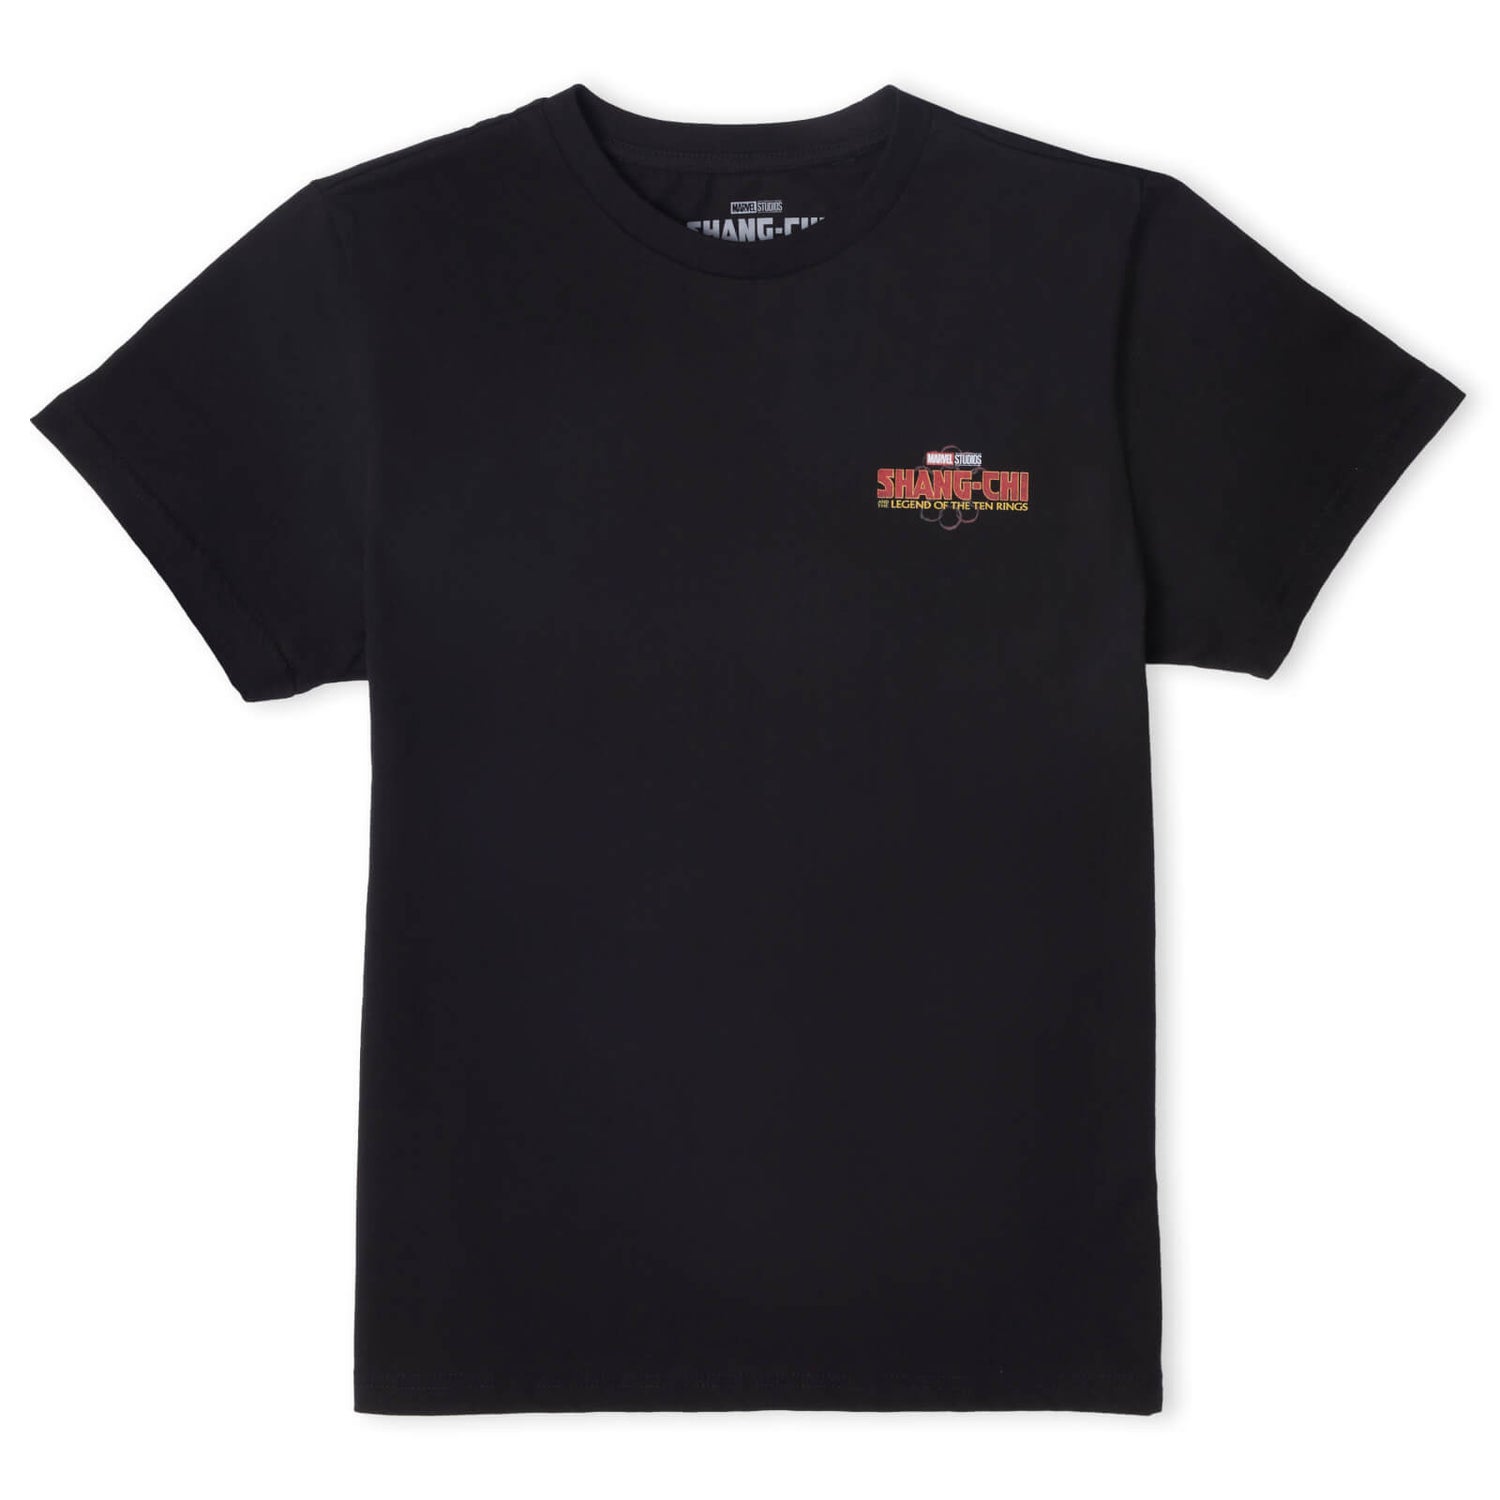 Shang-Chi Men's T-Shirt - Black